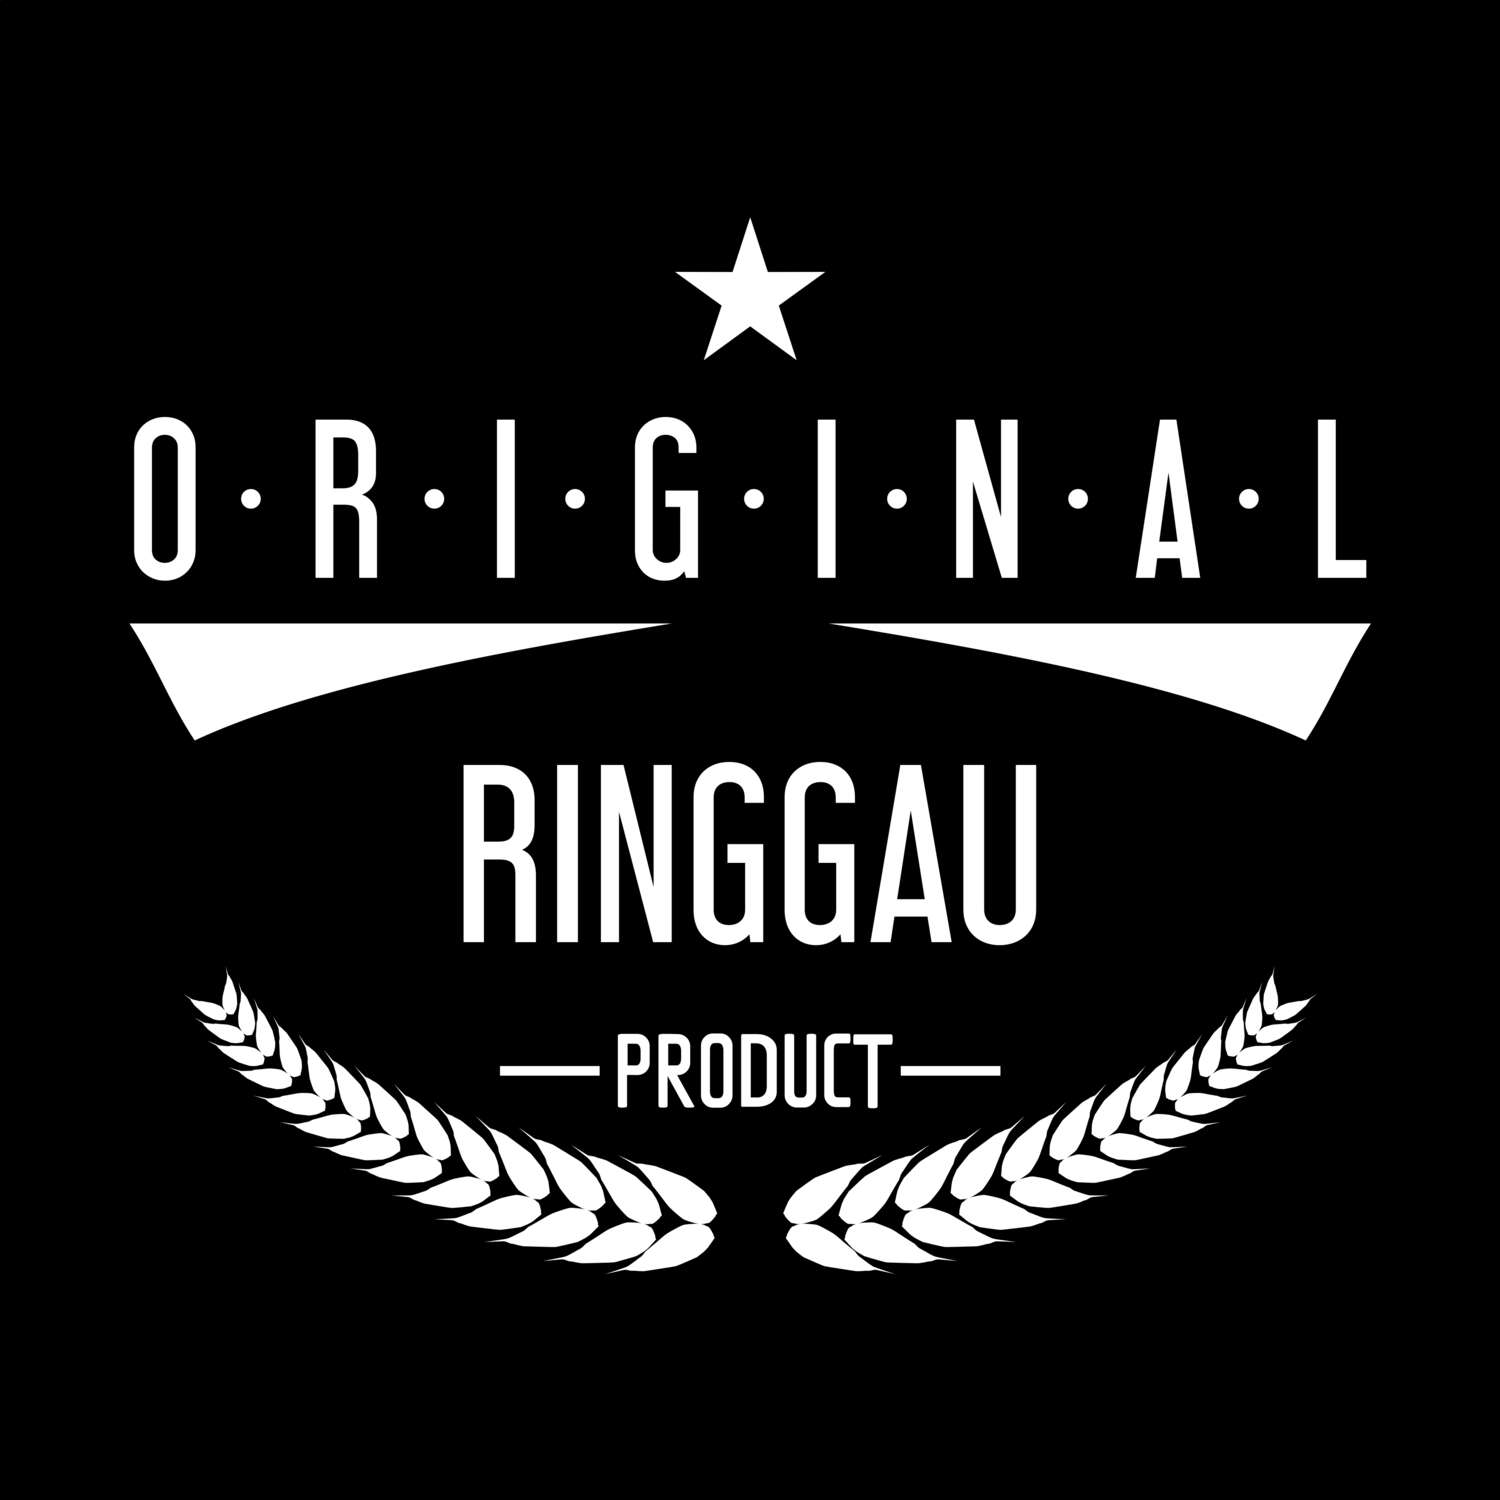 Ringgau T-Shirt »Original Product«